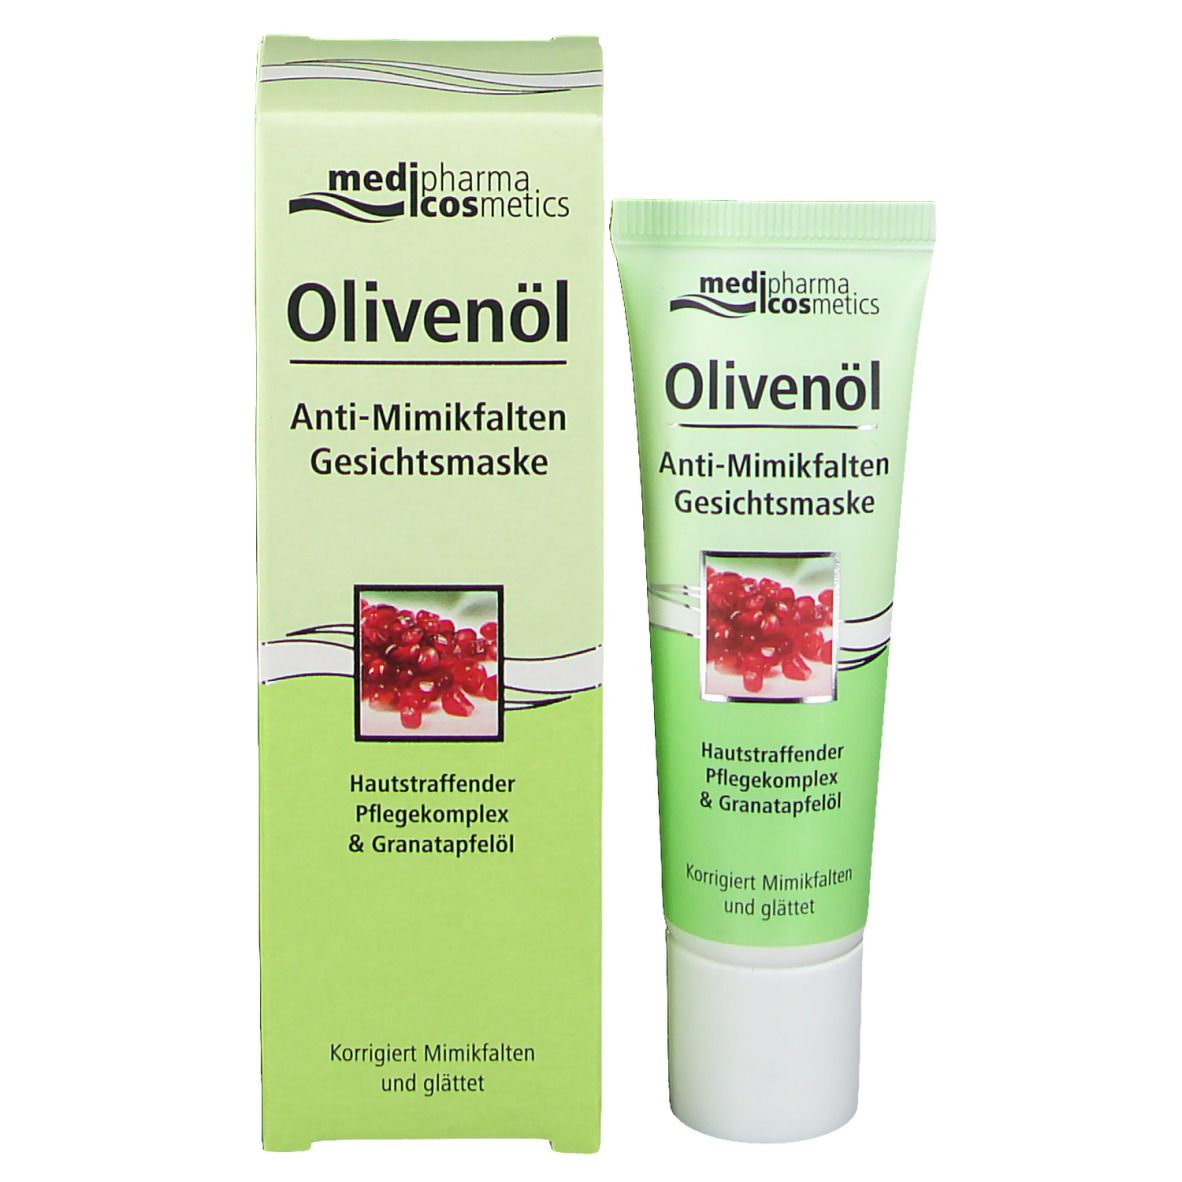 medipharma cosmetics Olivenöl Anti-Mimikfalten Gesichtsmaske